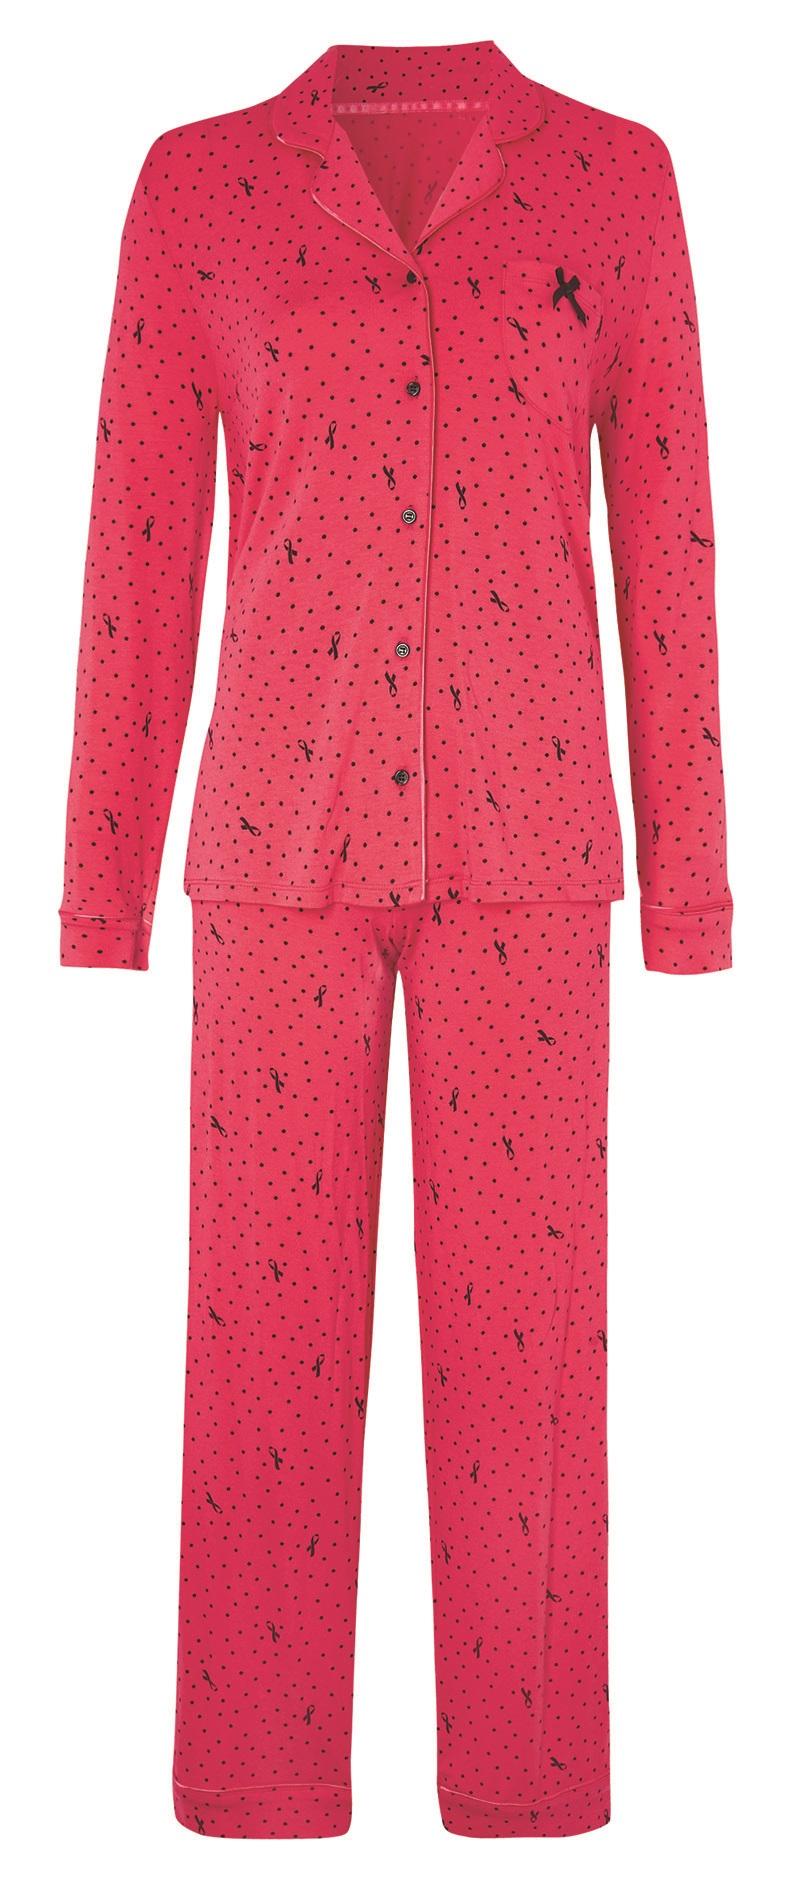 Asda George, Tickled Pink Pyjama Set, £14 with £1.50 donation